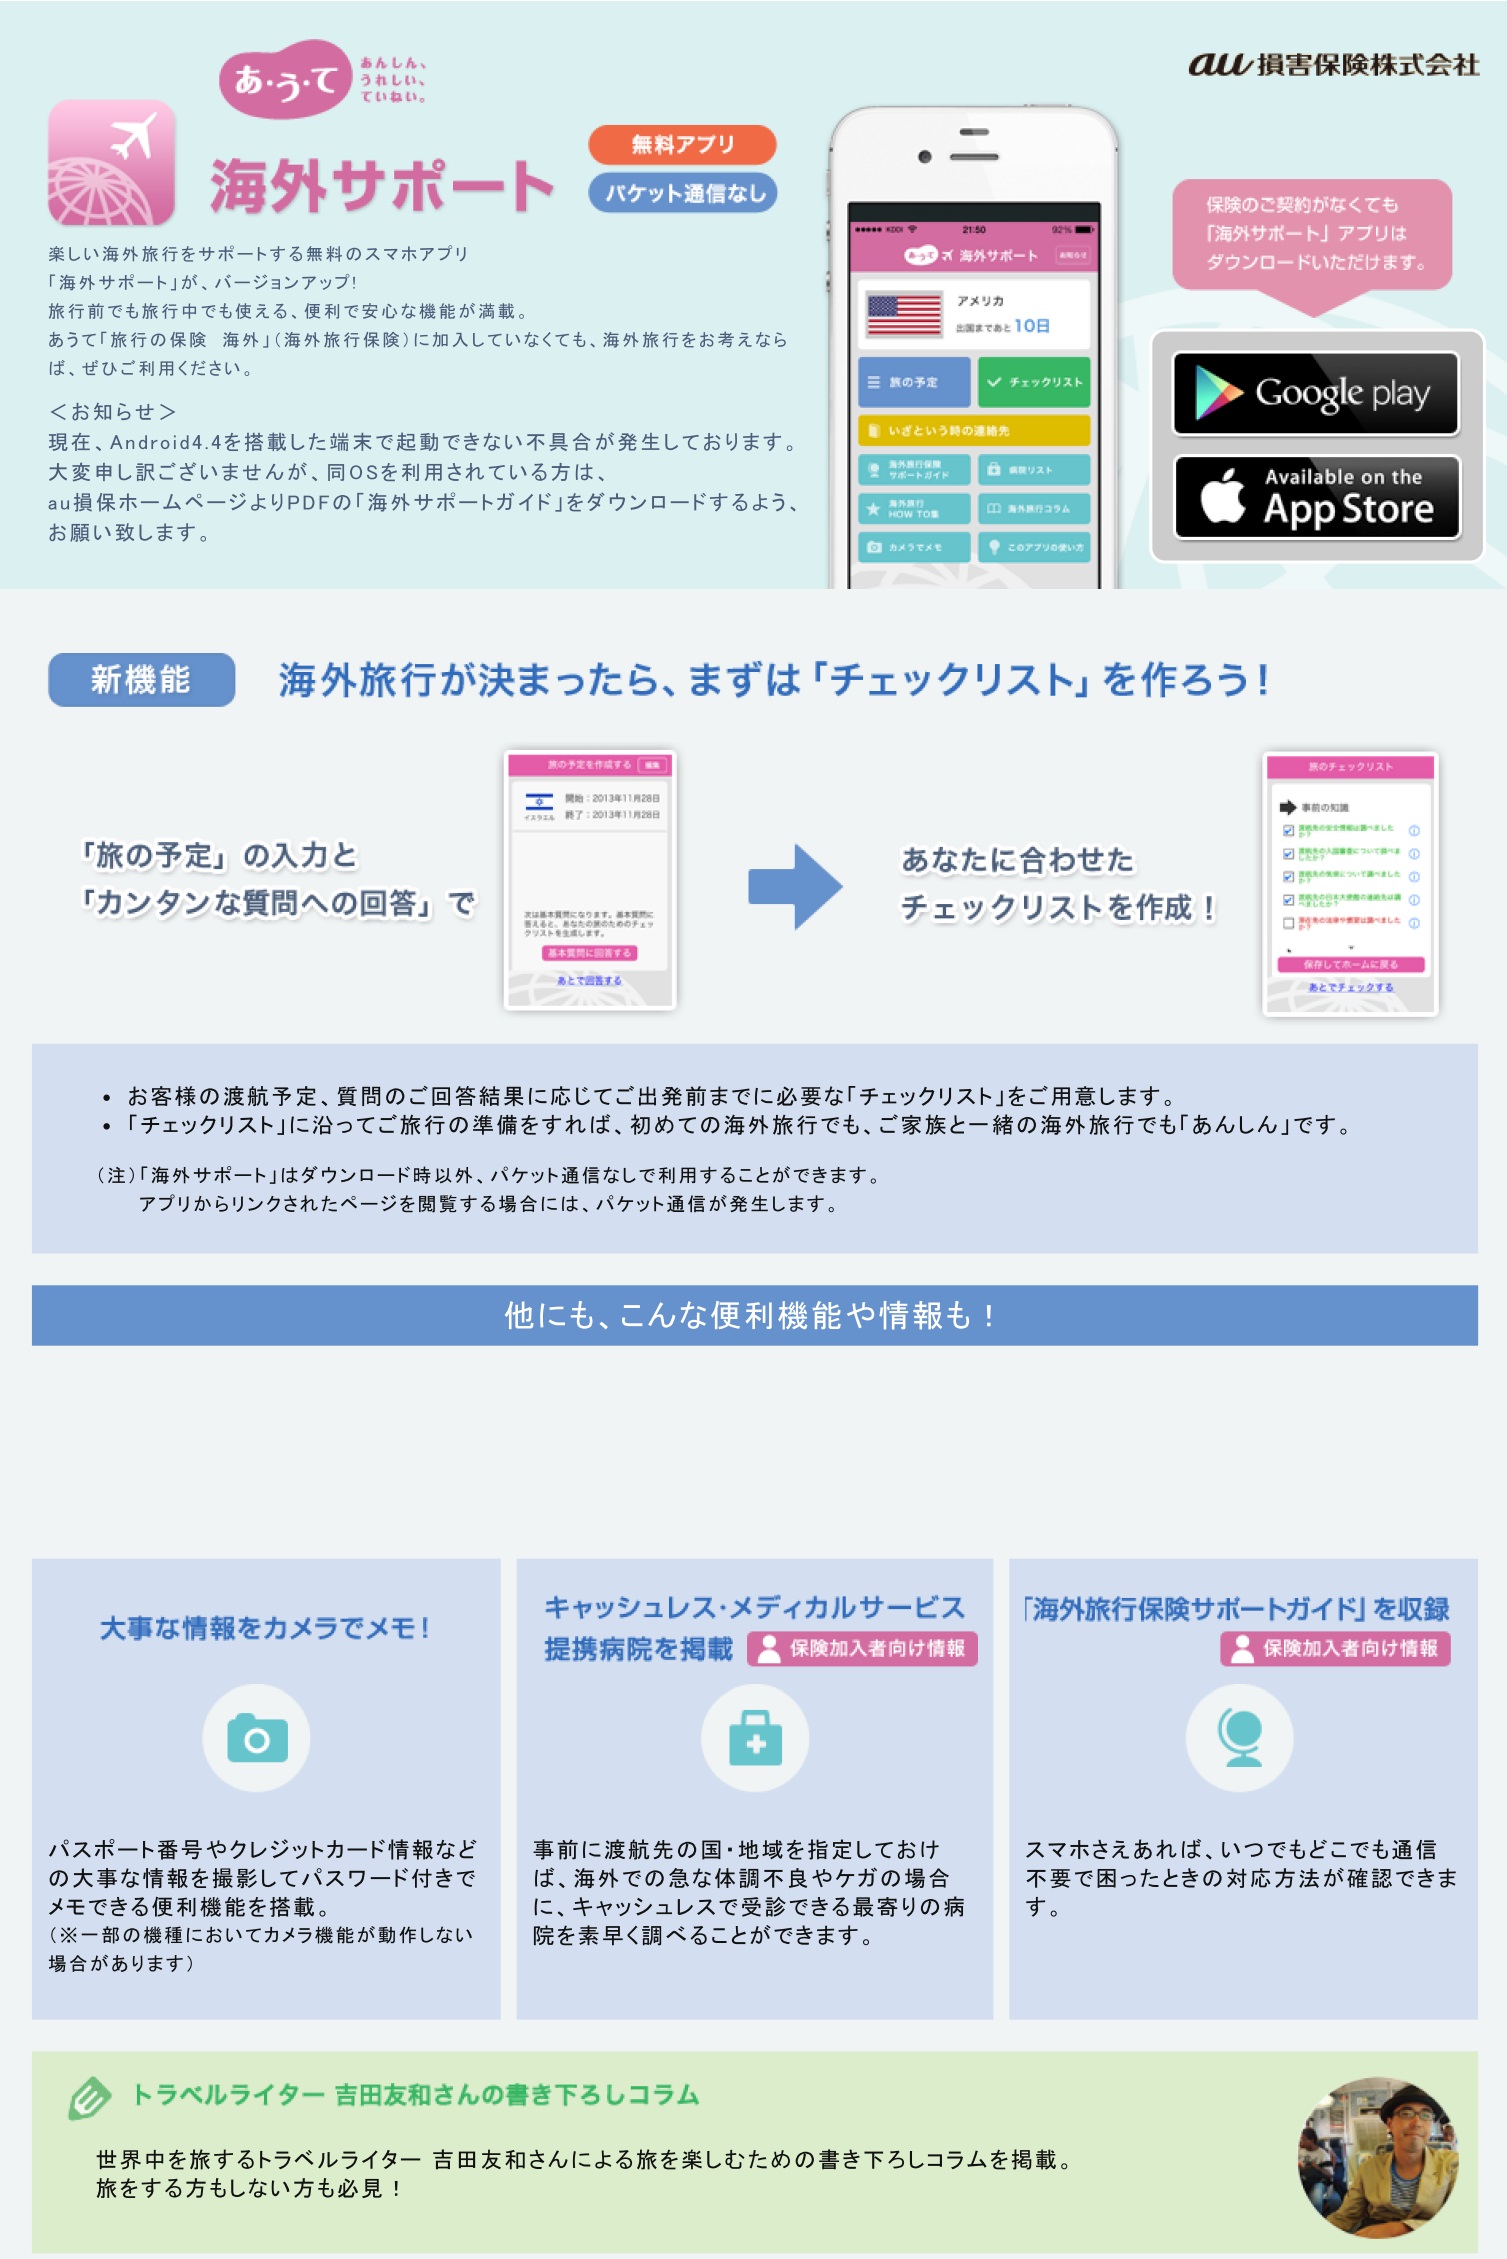 https://contact.misawa.co.jp/ownersclub/lifestyle/images/%E6%B5%B7%E5%A4%96%E3%82%B5%E3%83%9D%E3%83%BC%E3%83%88.jpg